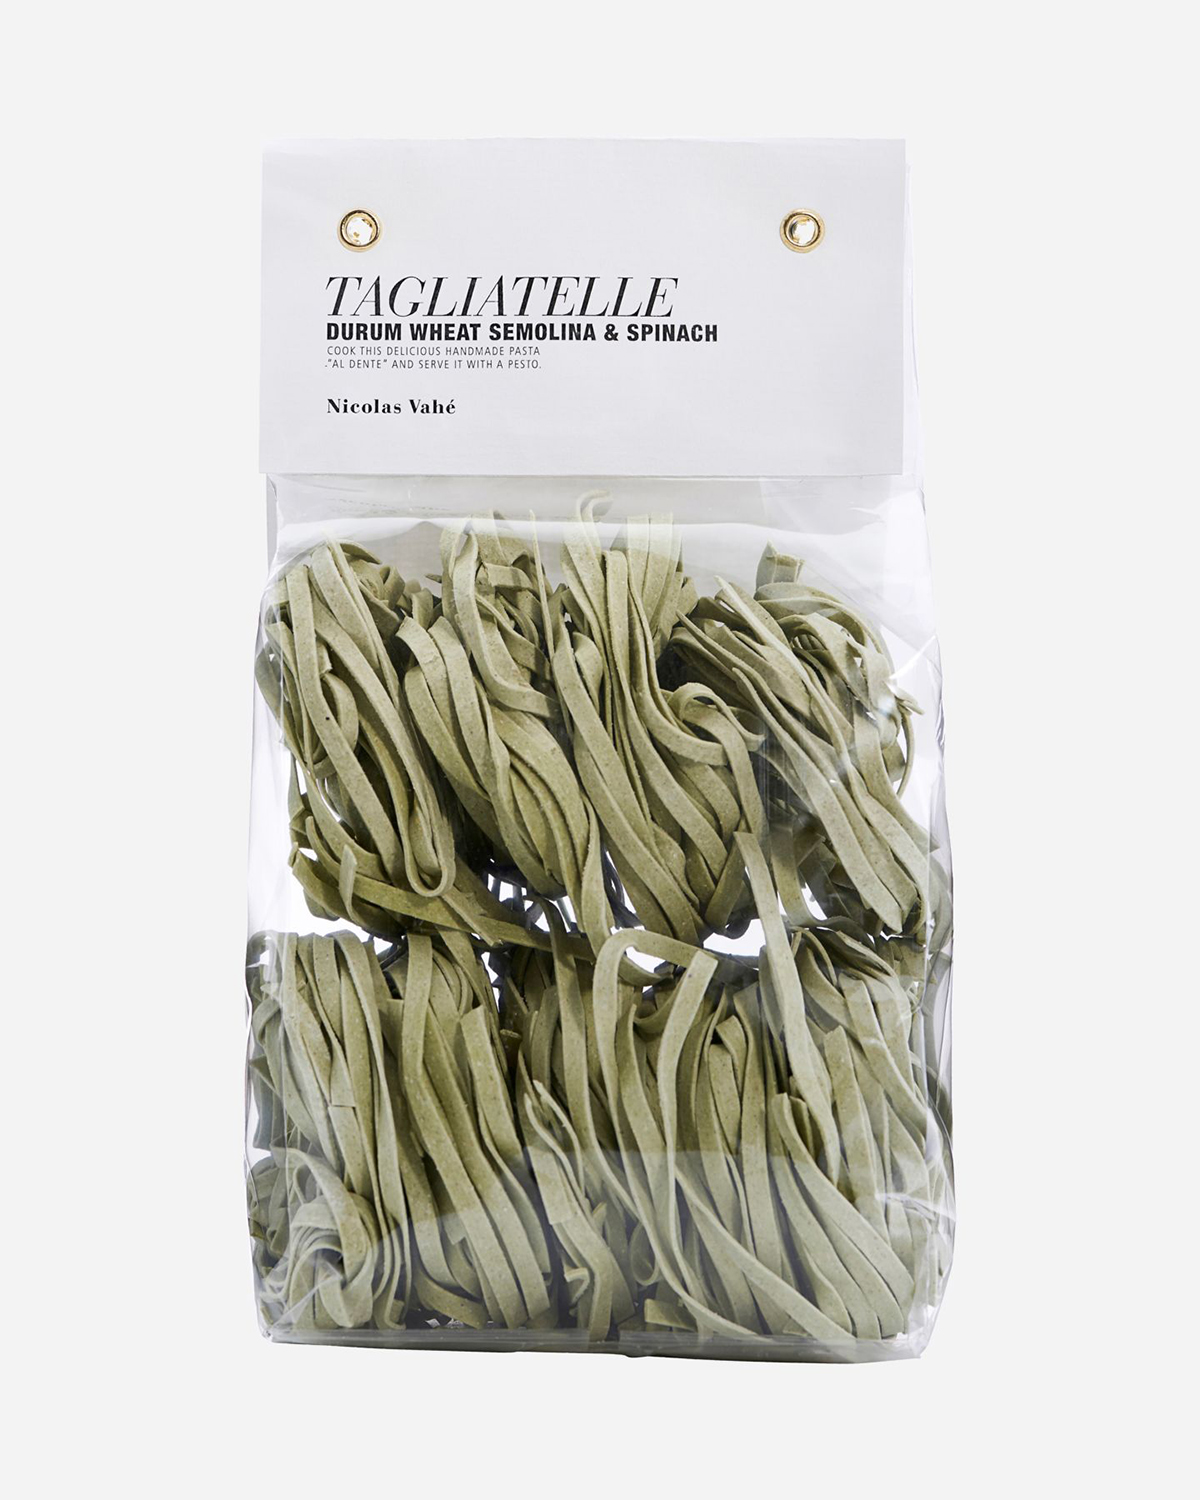 Tagliatelle - Durum Wheat Semolina & Spinach, 250 g.